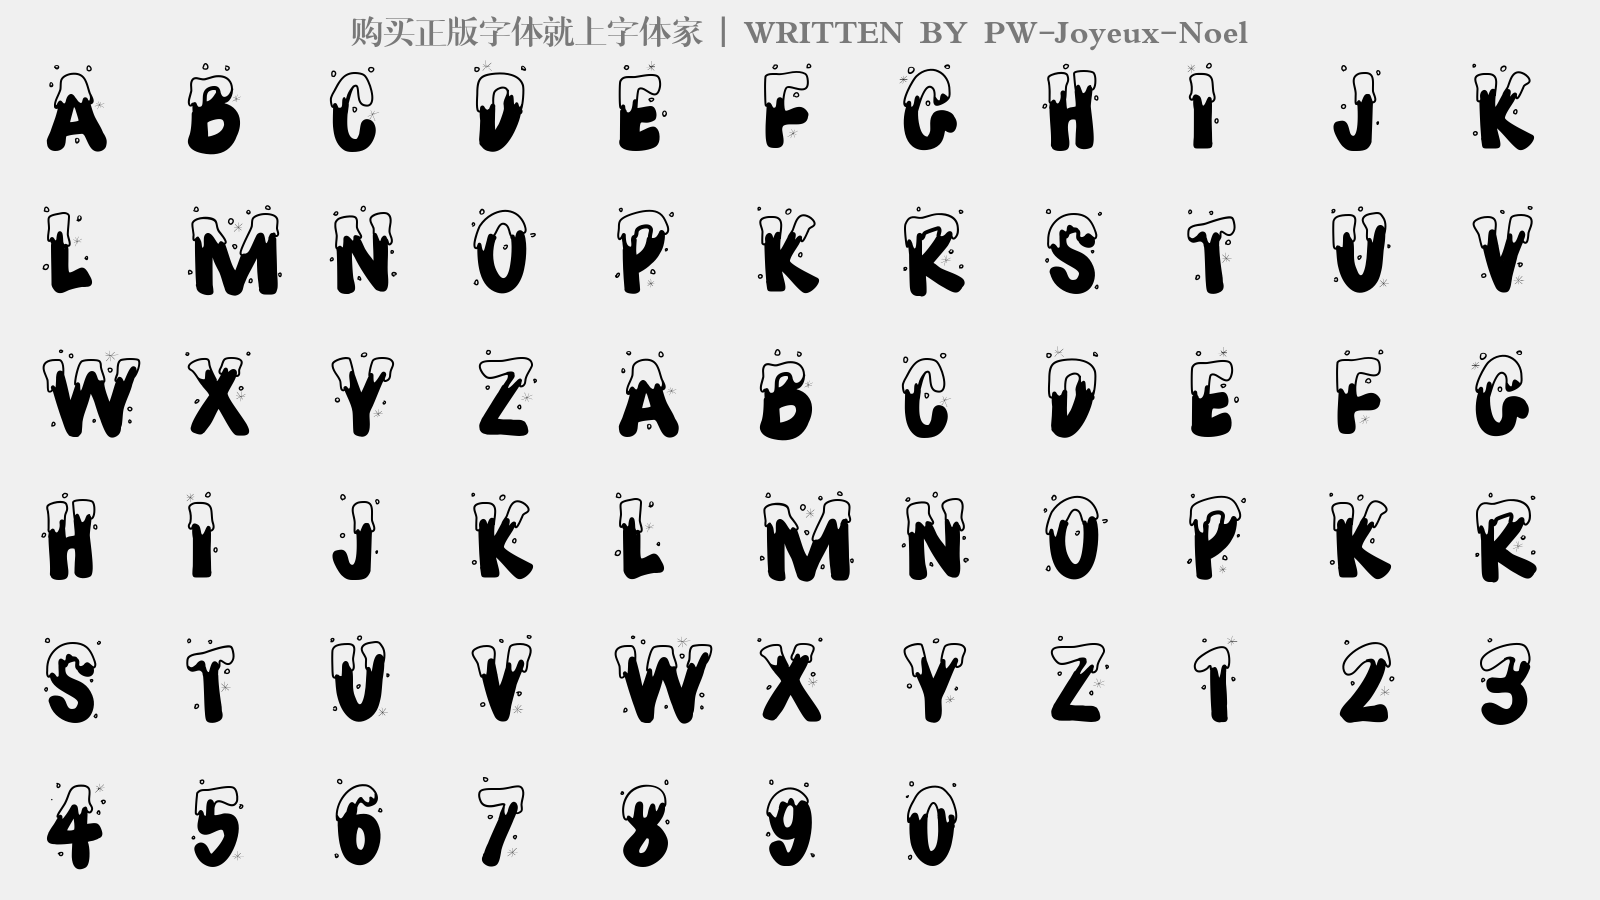 PW-Joyeux-Noel - 大写字母/小写字母/数字